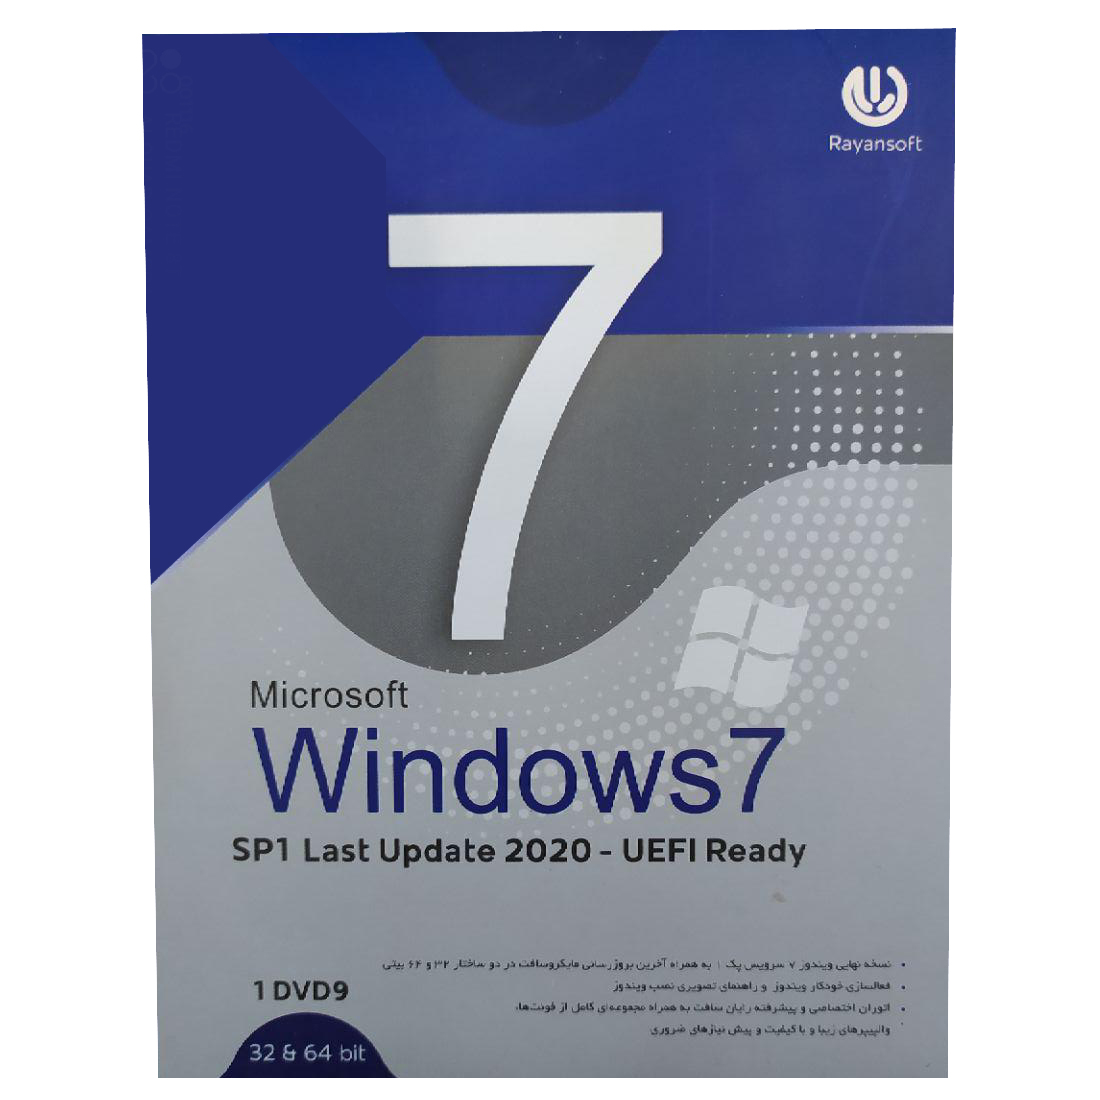 سیستم عامل Windows 7 SP1 Last Update 2020 - UEFI Ready نشر رایان سافت